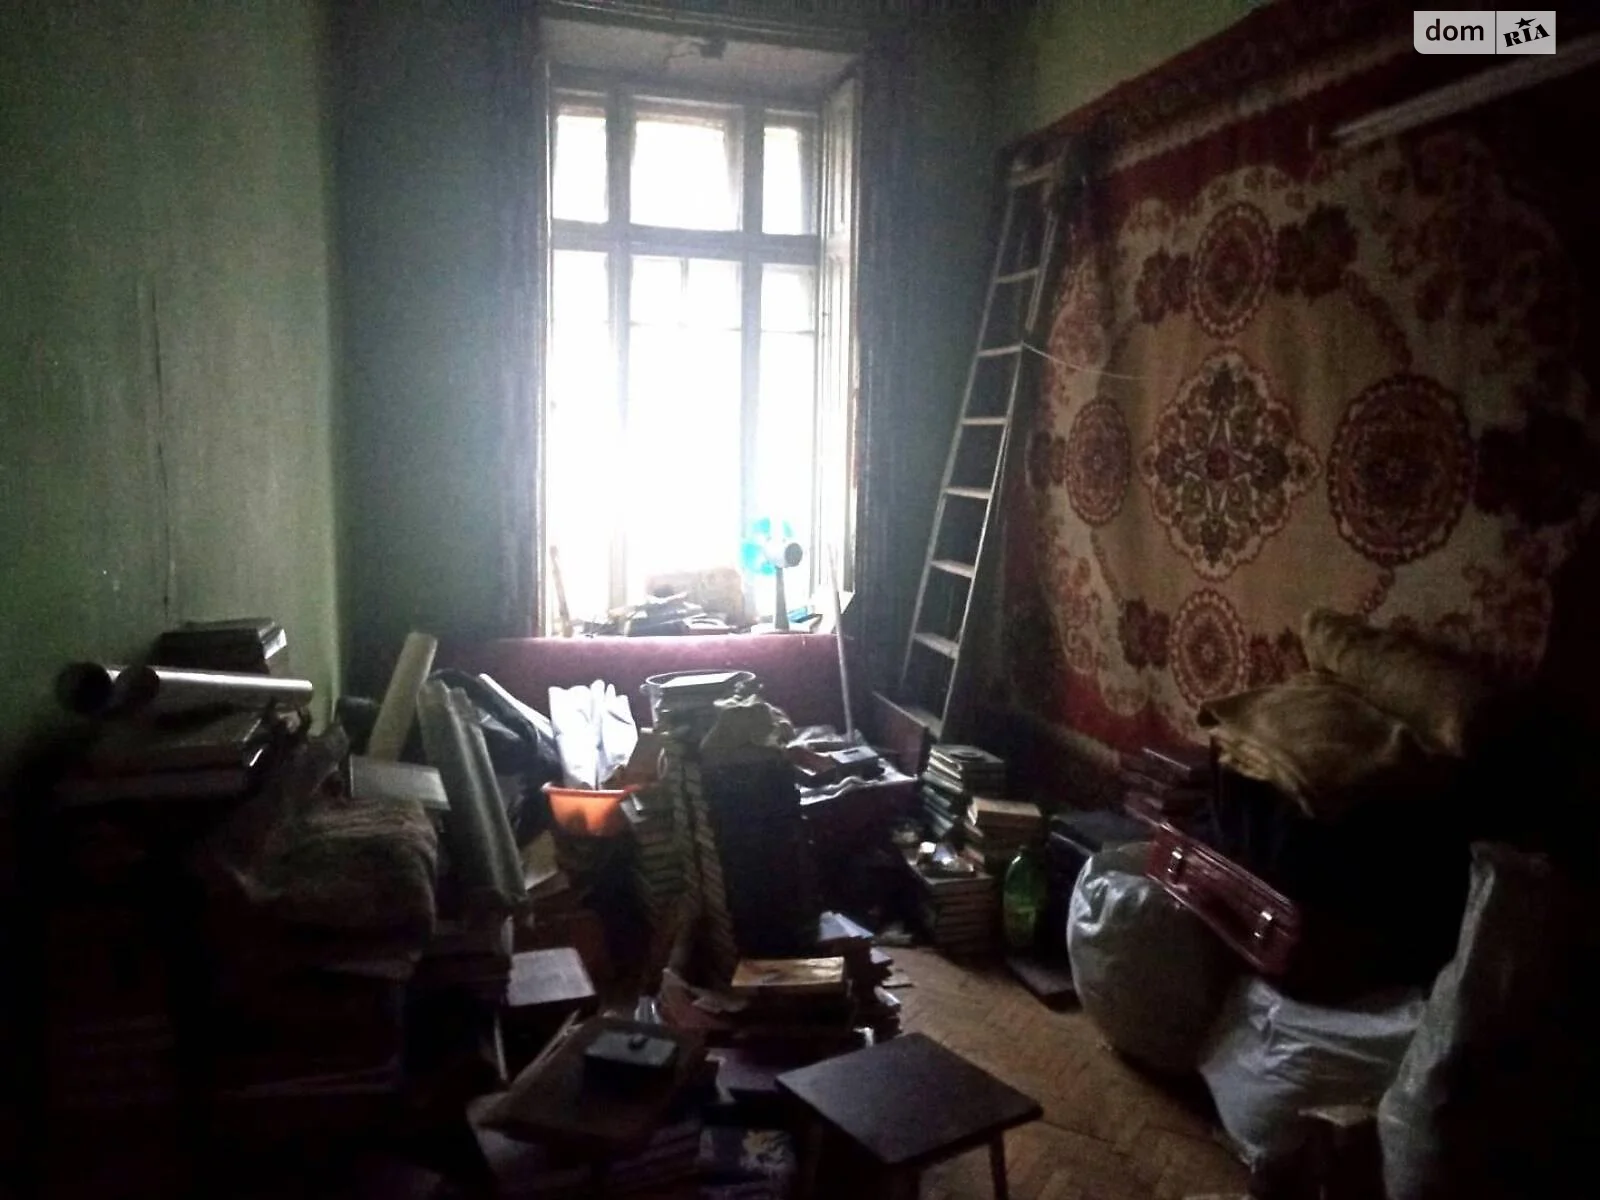 Продается комната 31 кв. м в Одессе, цена: 31000 $ - фото 1